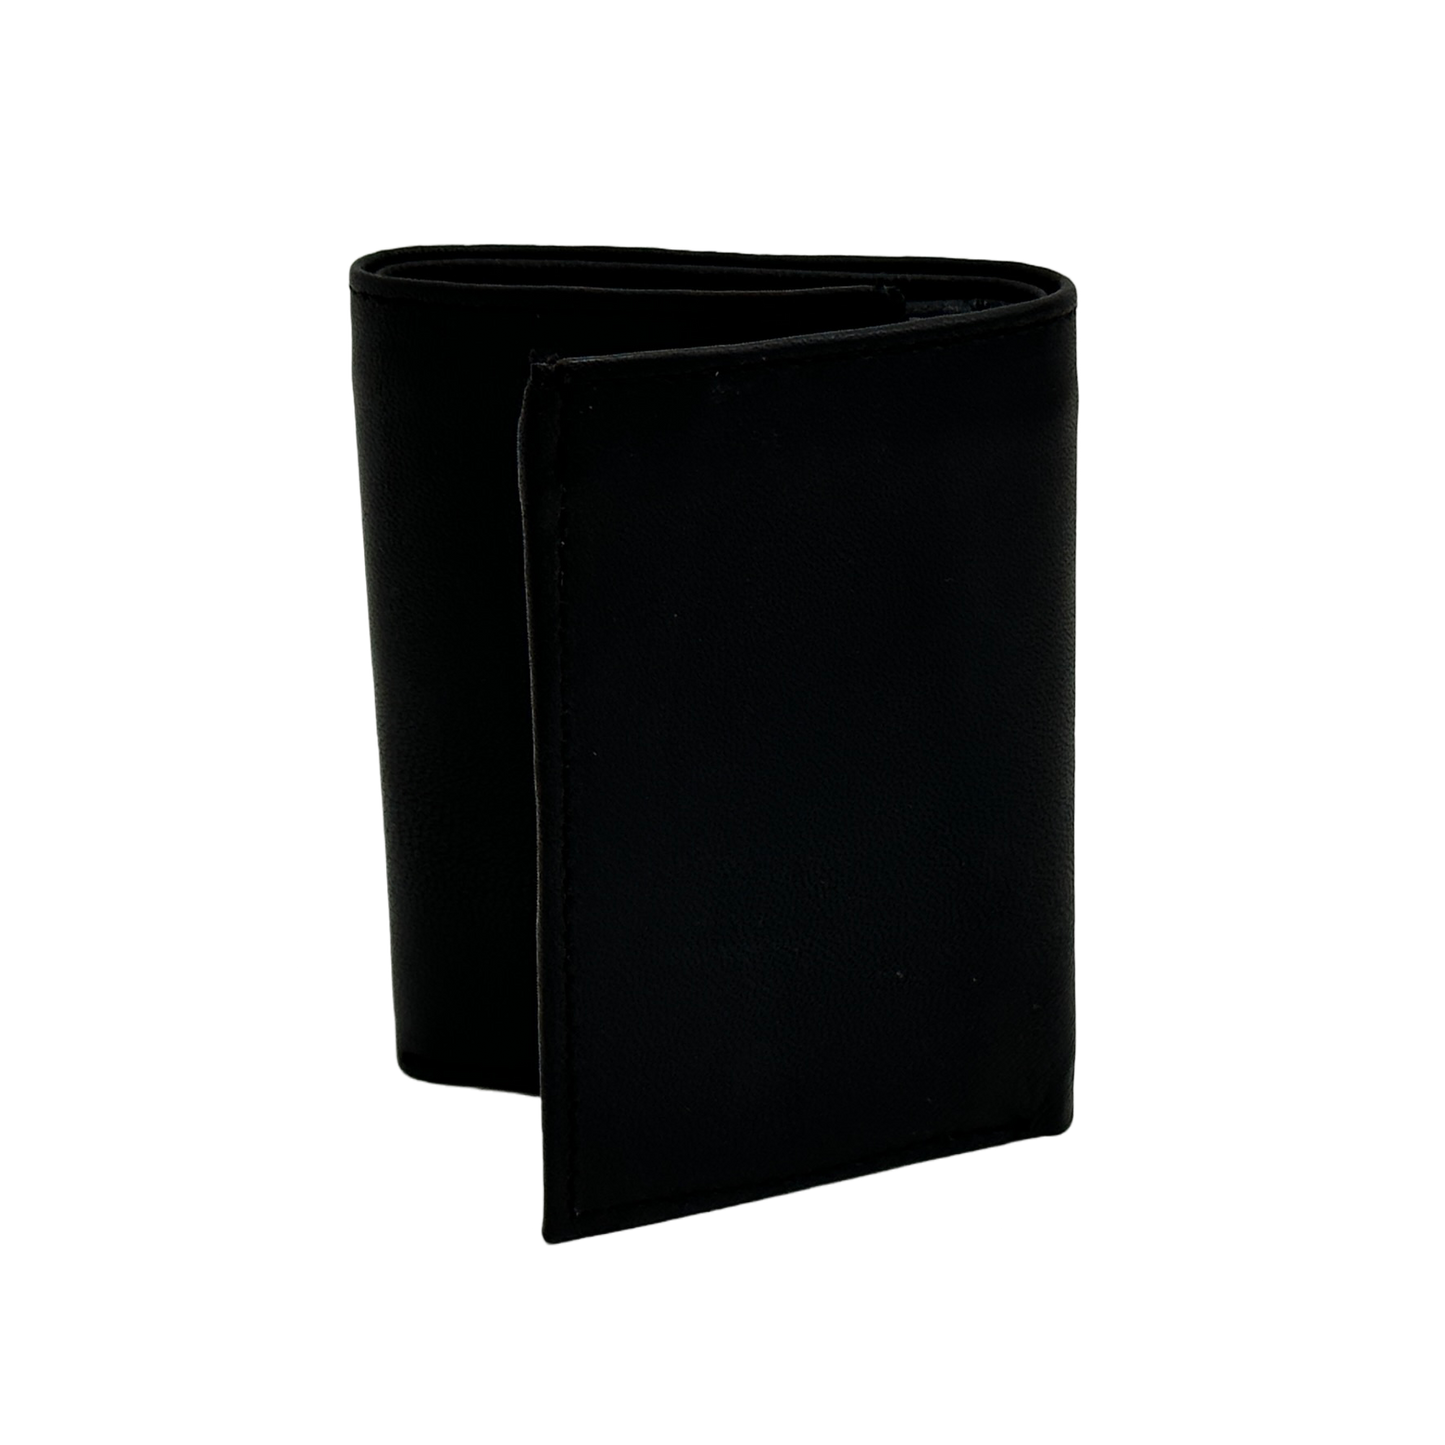 Tri Fold Wallet - Black